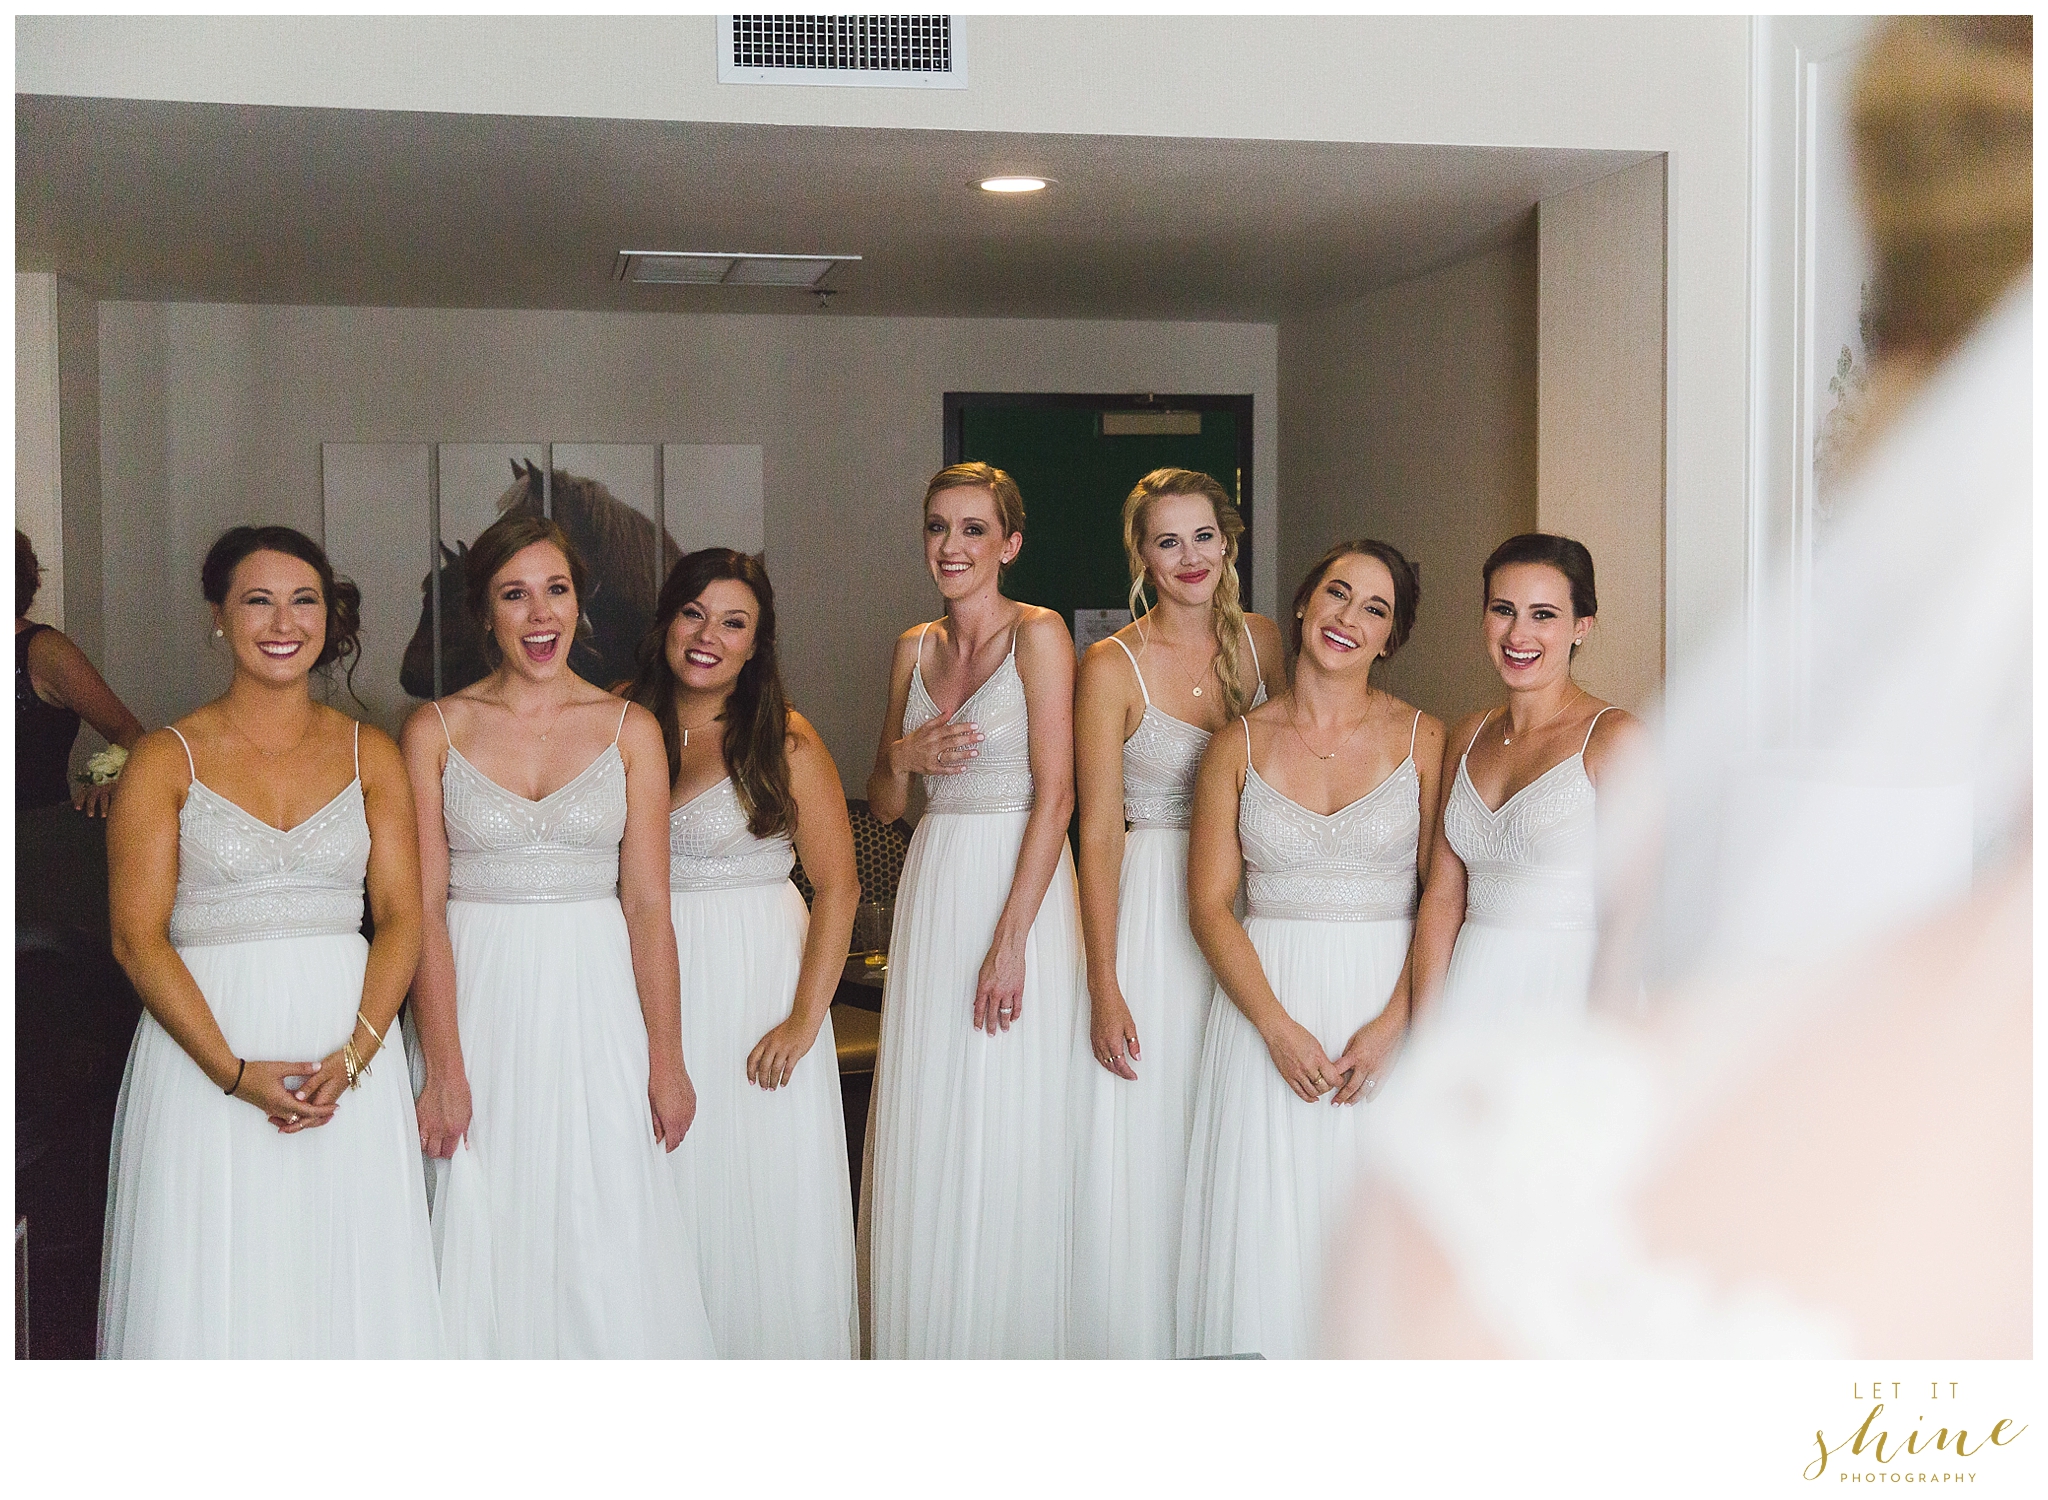 The Grove Hotel Boise Wedding 2017 Let it Shine Photography-8448.jpg